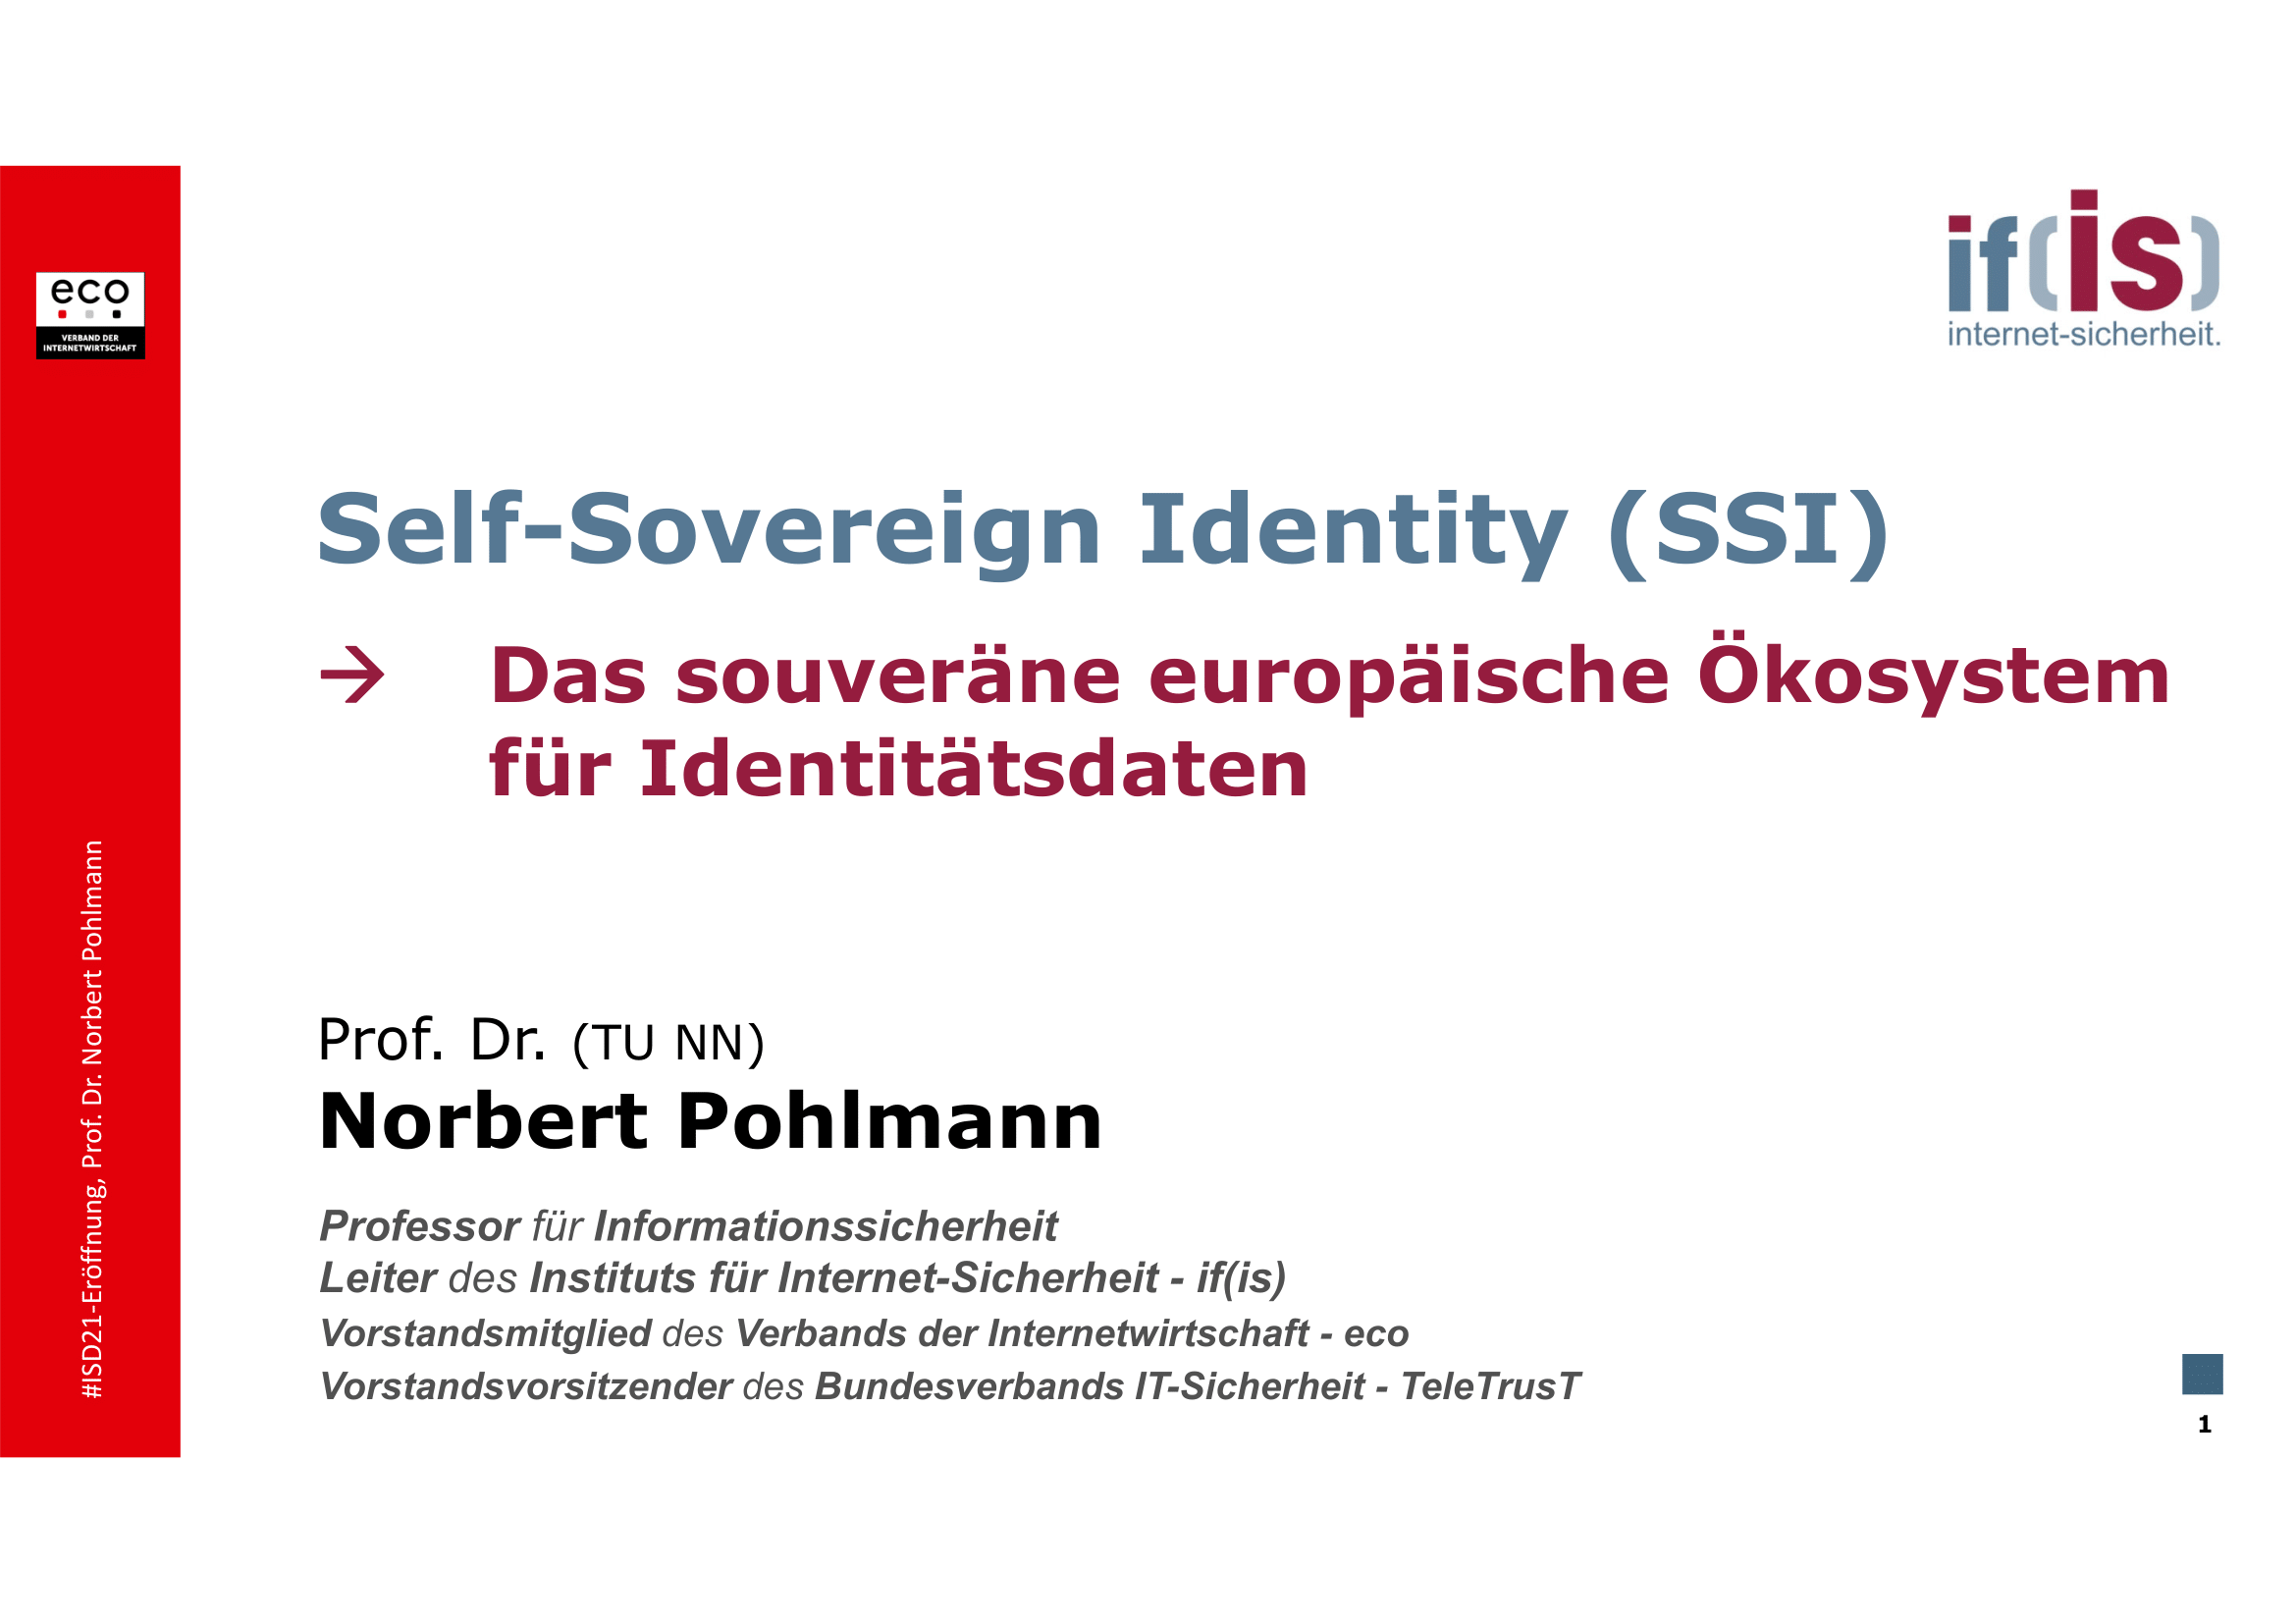 394 - Self-Sovereign Identity (SSI) - Das souveräne europäische Ökosystem - Prof Norbert Pohlmann